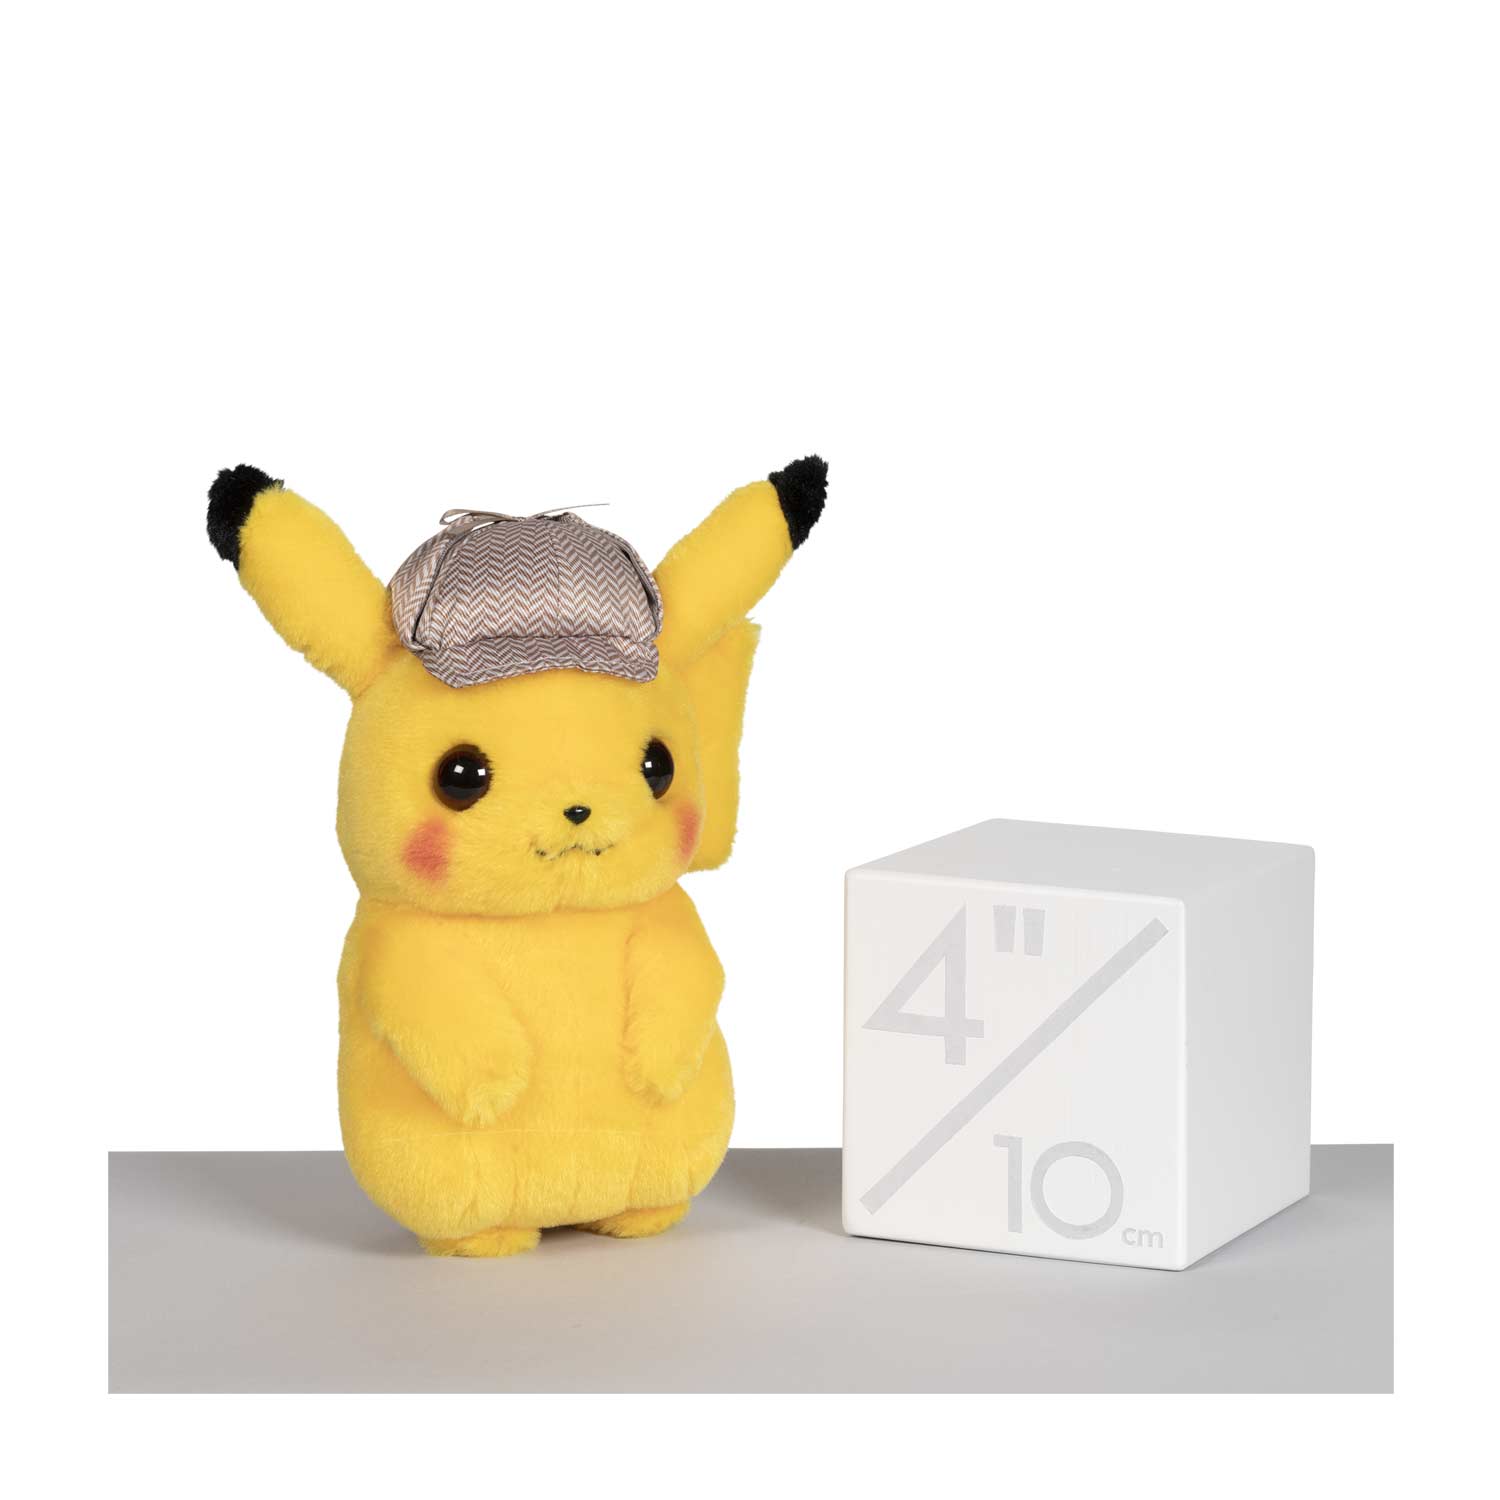 Details about    8" Detective Pikachu Pokemon Plush With Pin Set